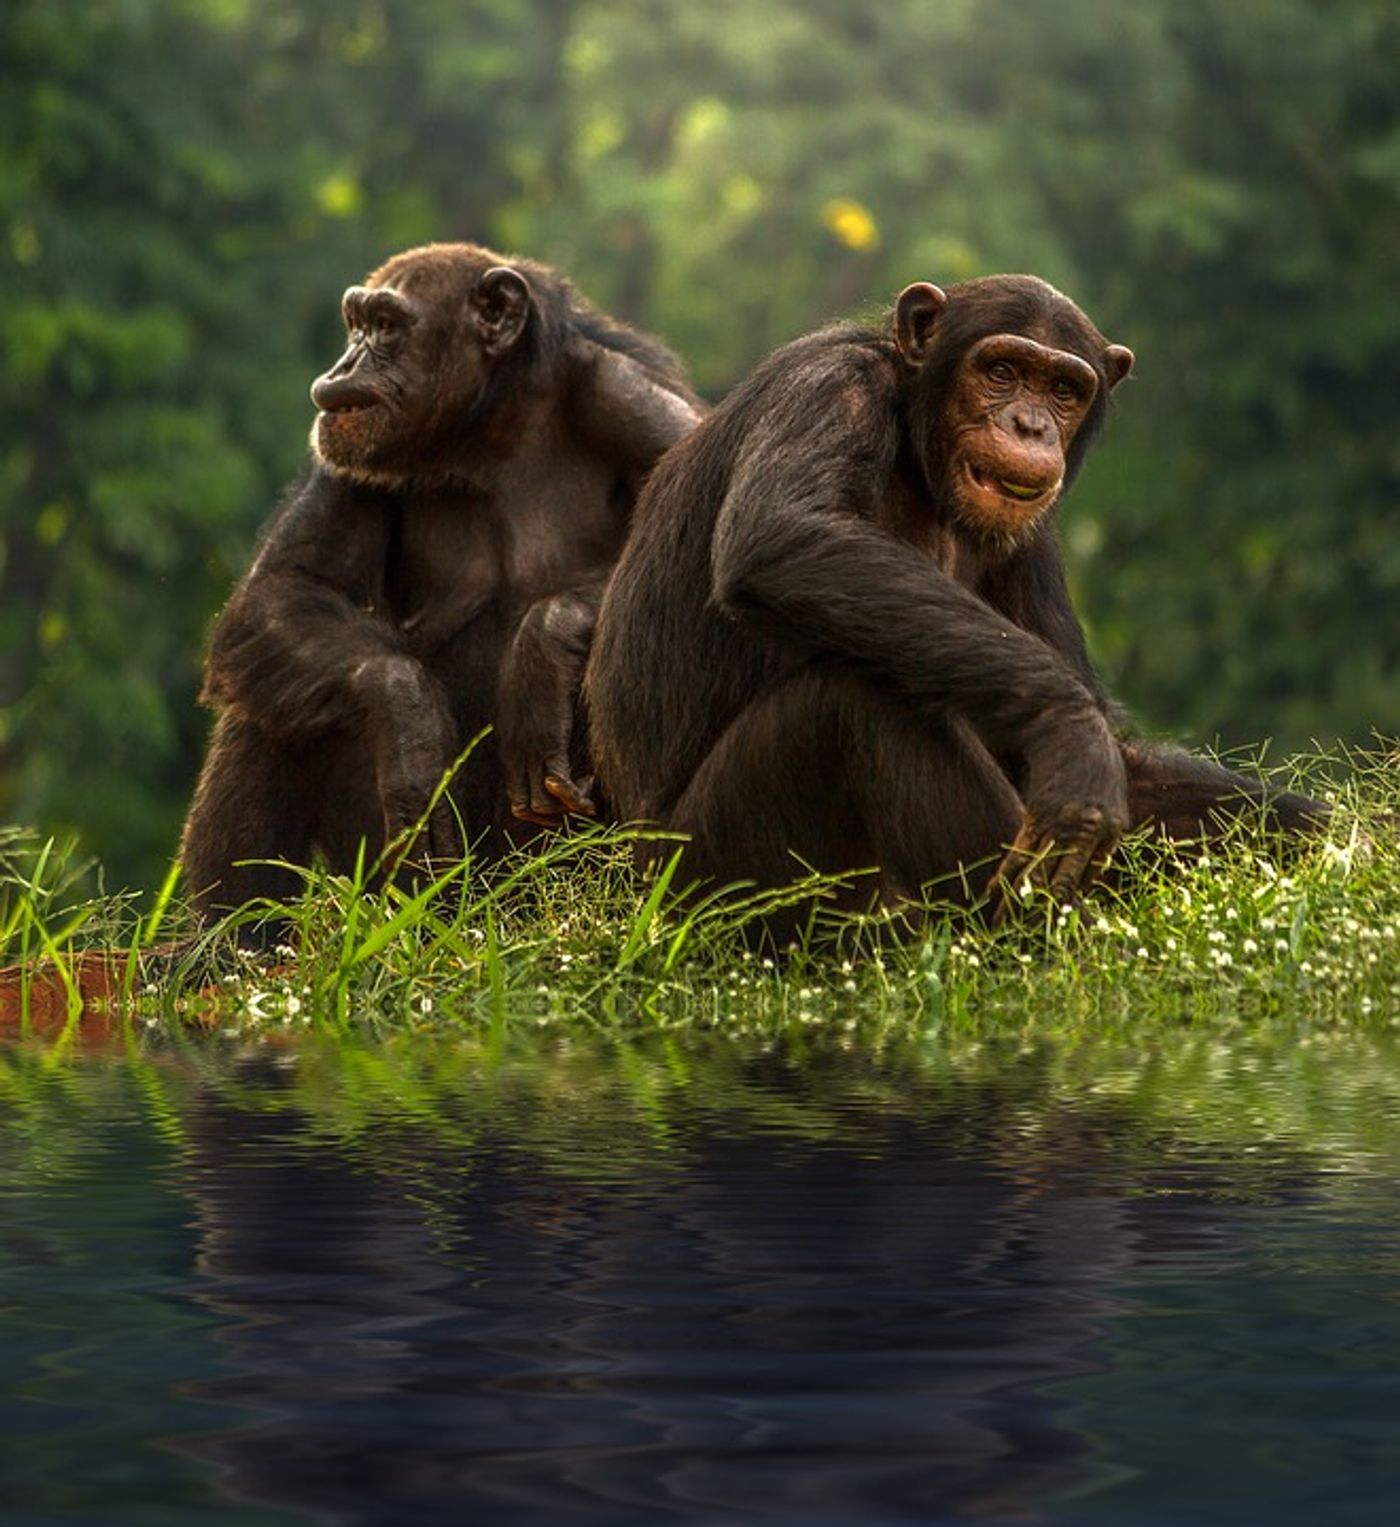 Do kinder chimps live longer lives? A study suggests yes.